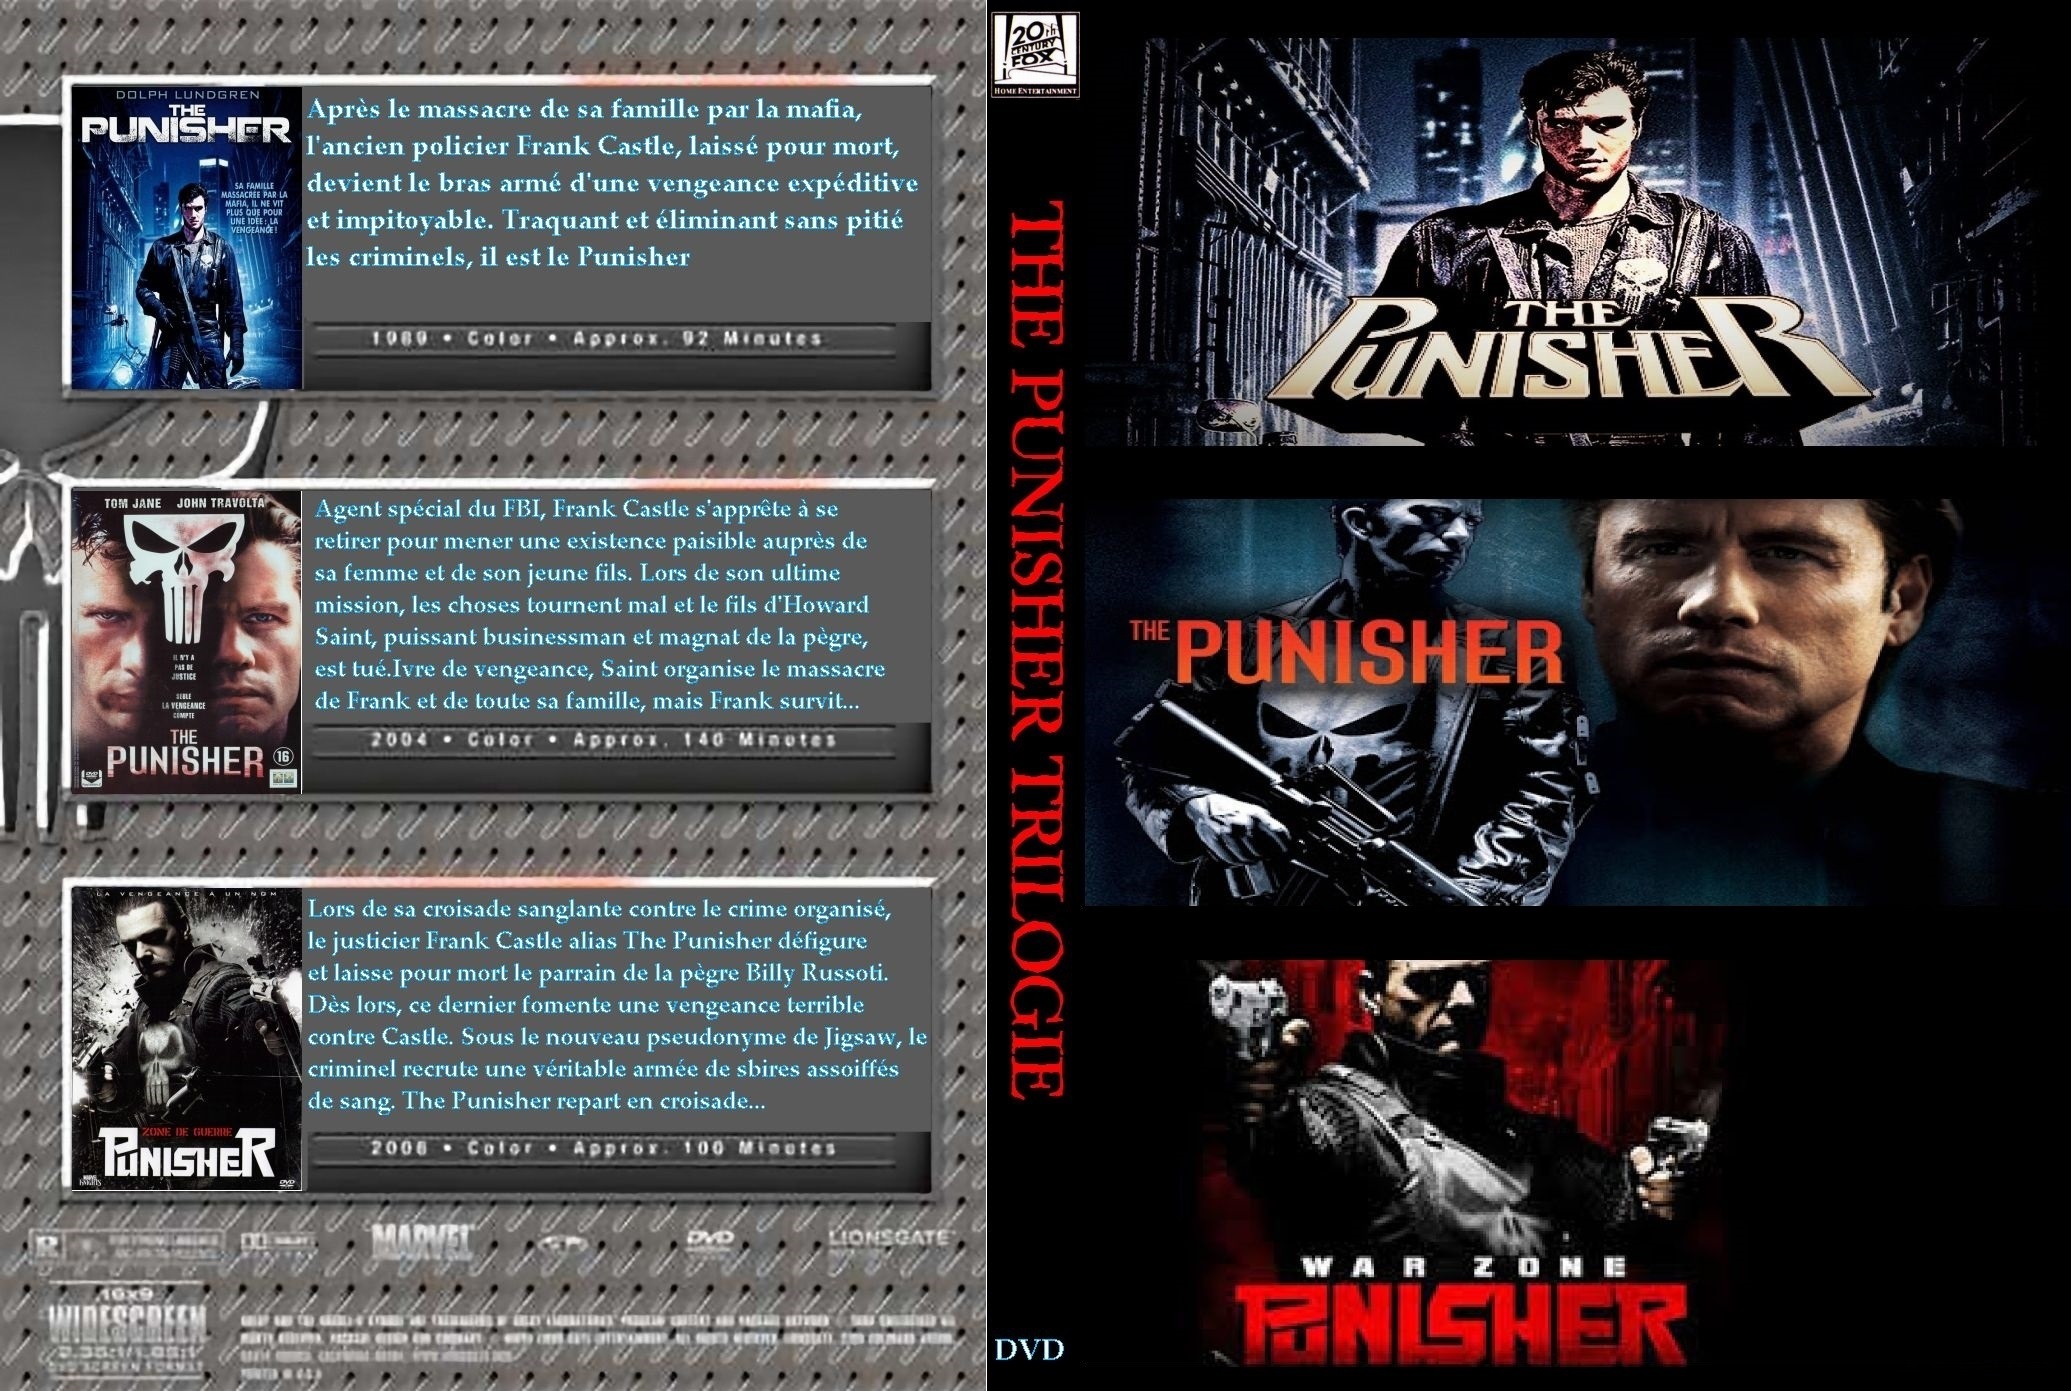 Jaquette DVD Punisher Trilogie custom